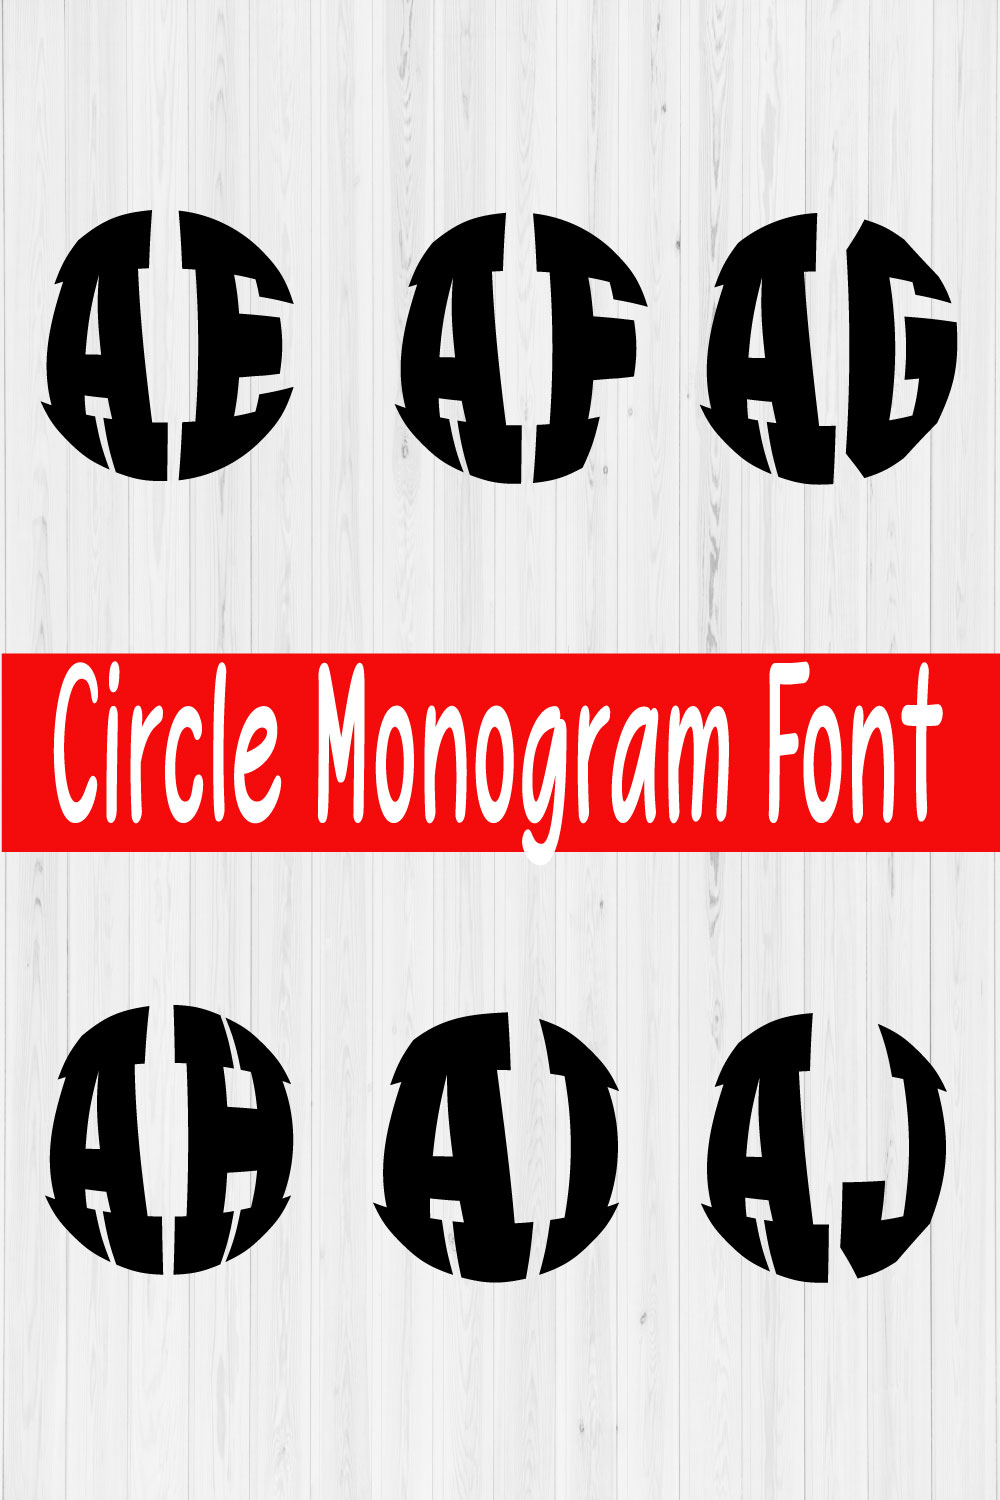 Circle Monogram Font Vol6 pinterest preview image.